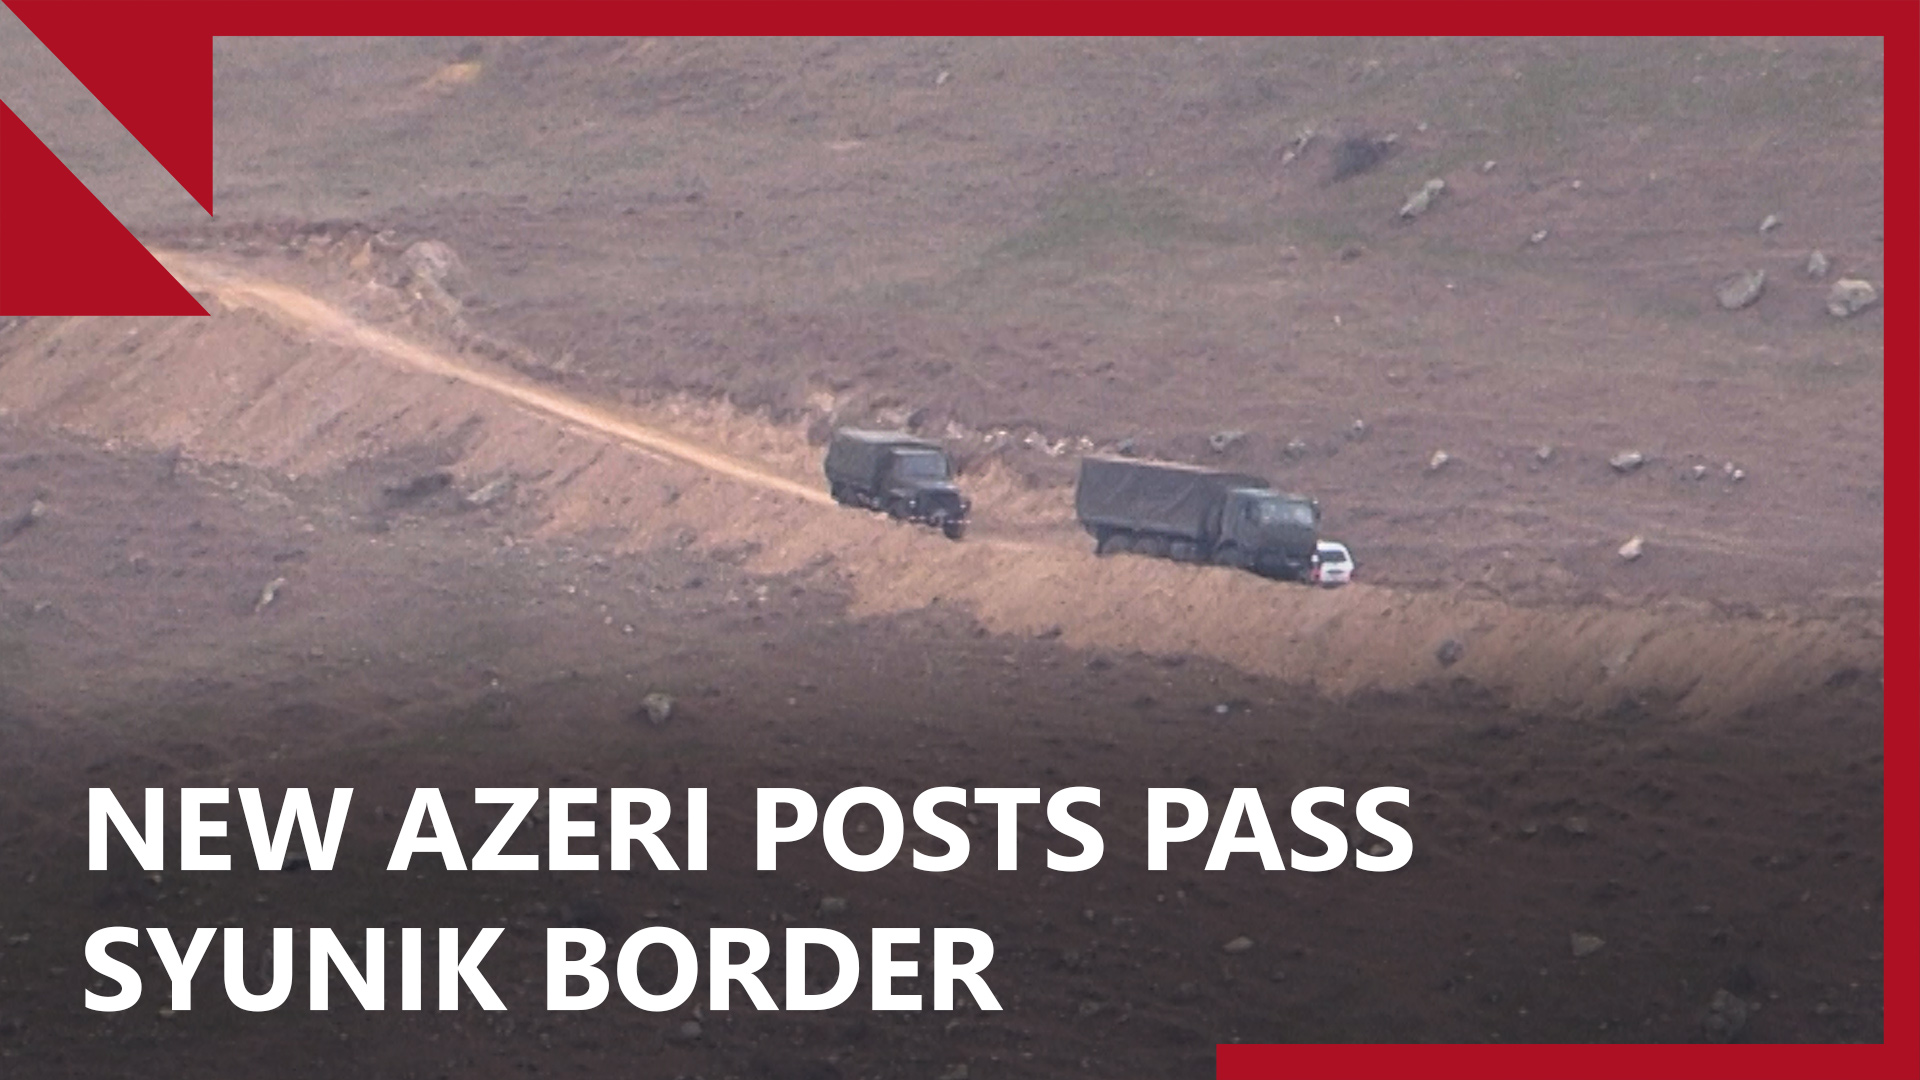 Azerbaijan sets up posts 300 meters into Armenian territory, alarming local residents